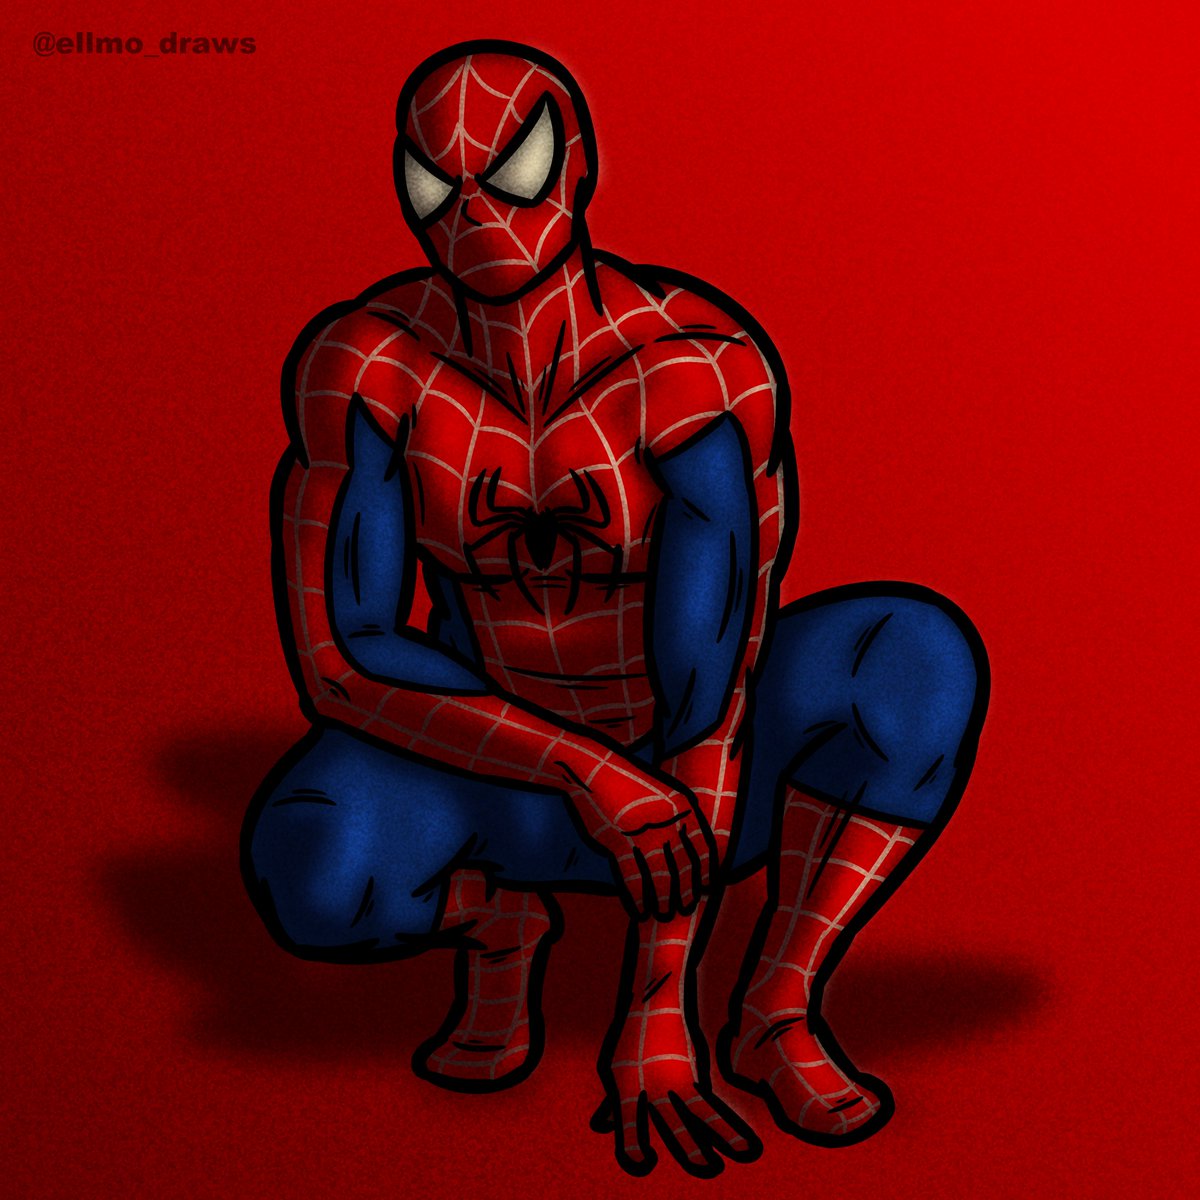 RT @ellmo_draws: Raimi's Spider-Man 
By me :)
#fanart #SpiderMan https://t.co/RIRFVDhPk4